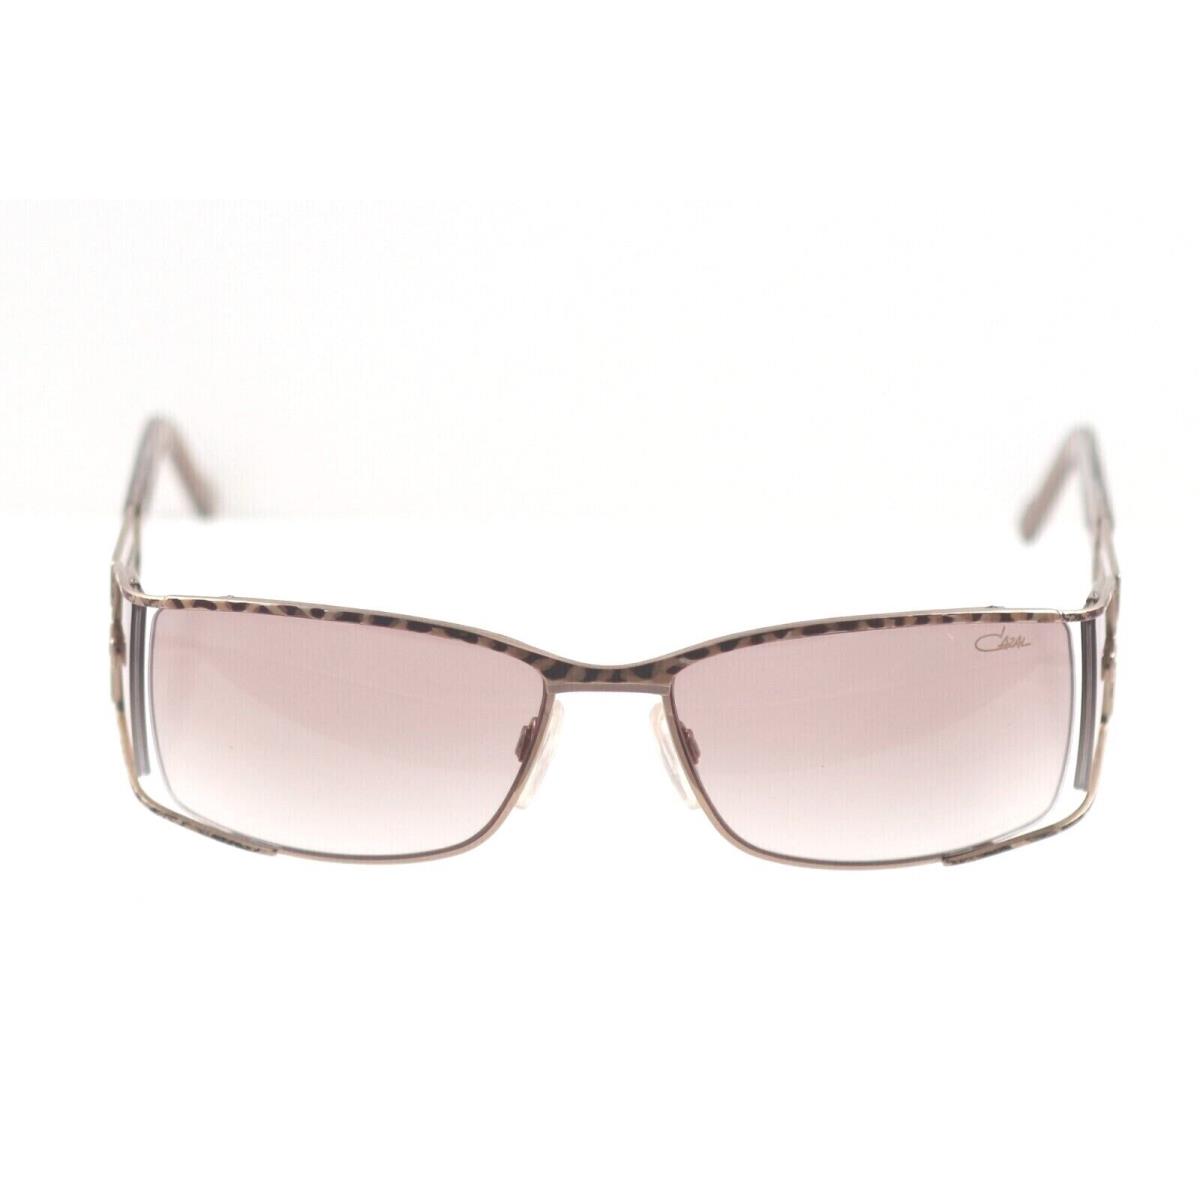 Cazal 9032 Sunglasses Women`s 002 Tortoise Gold 59-17-120 Retail